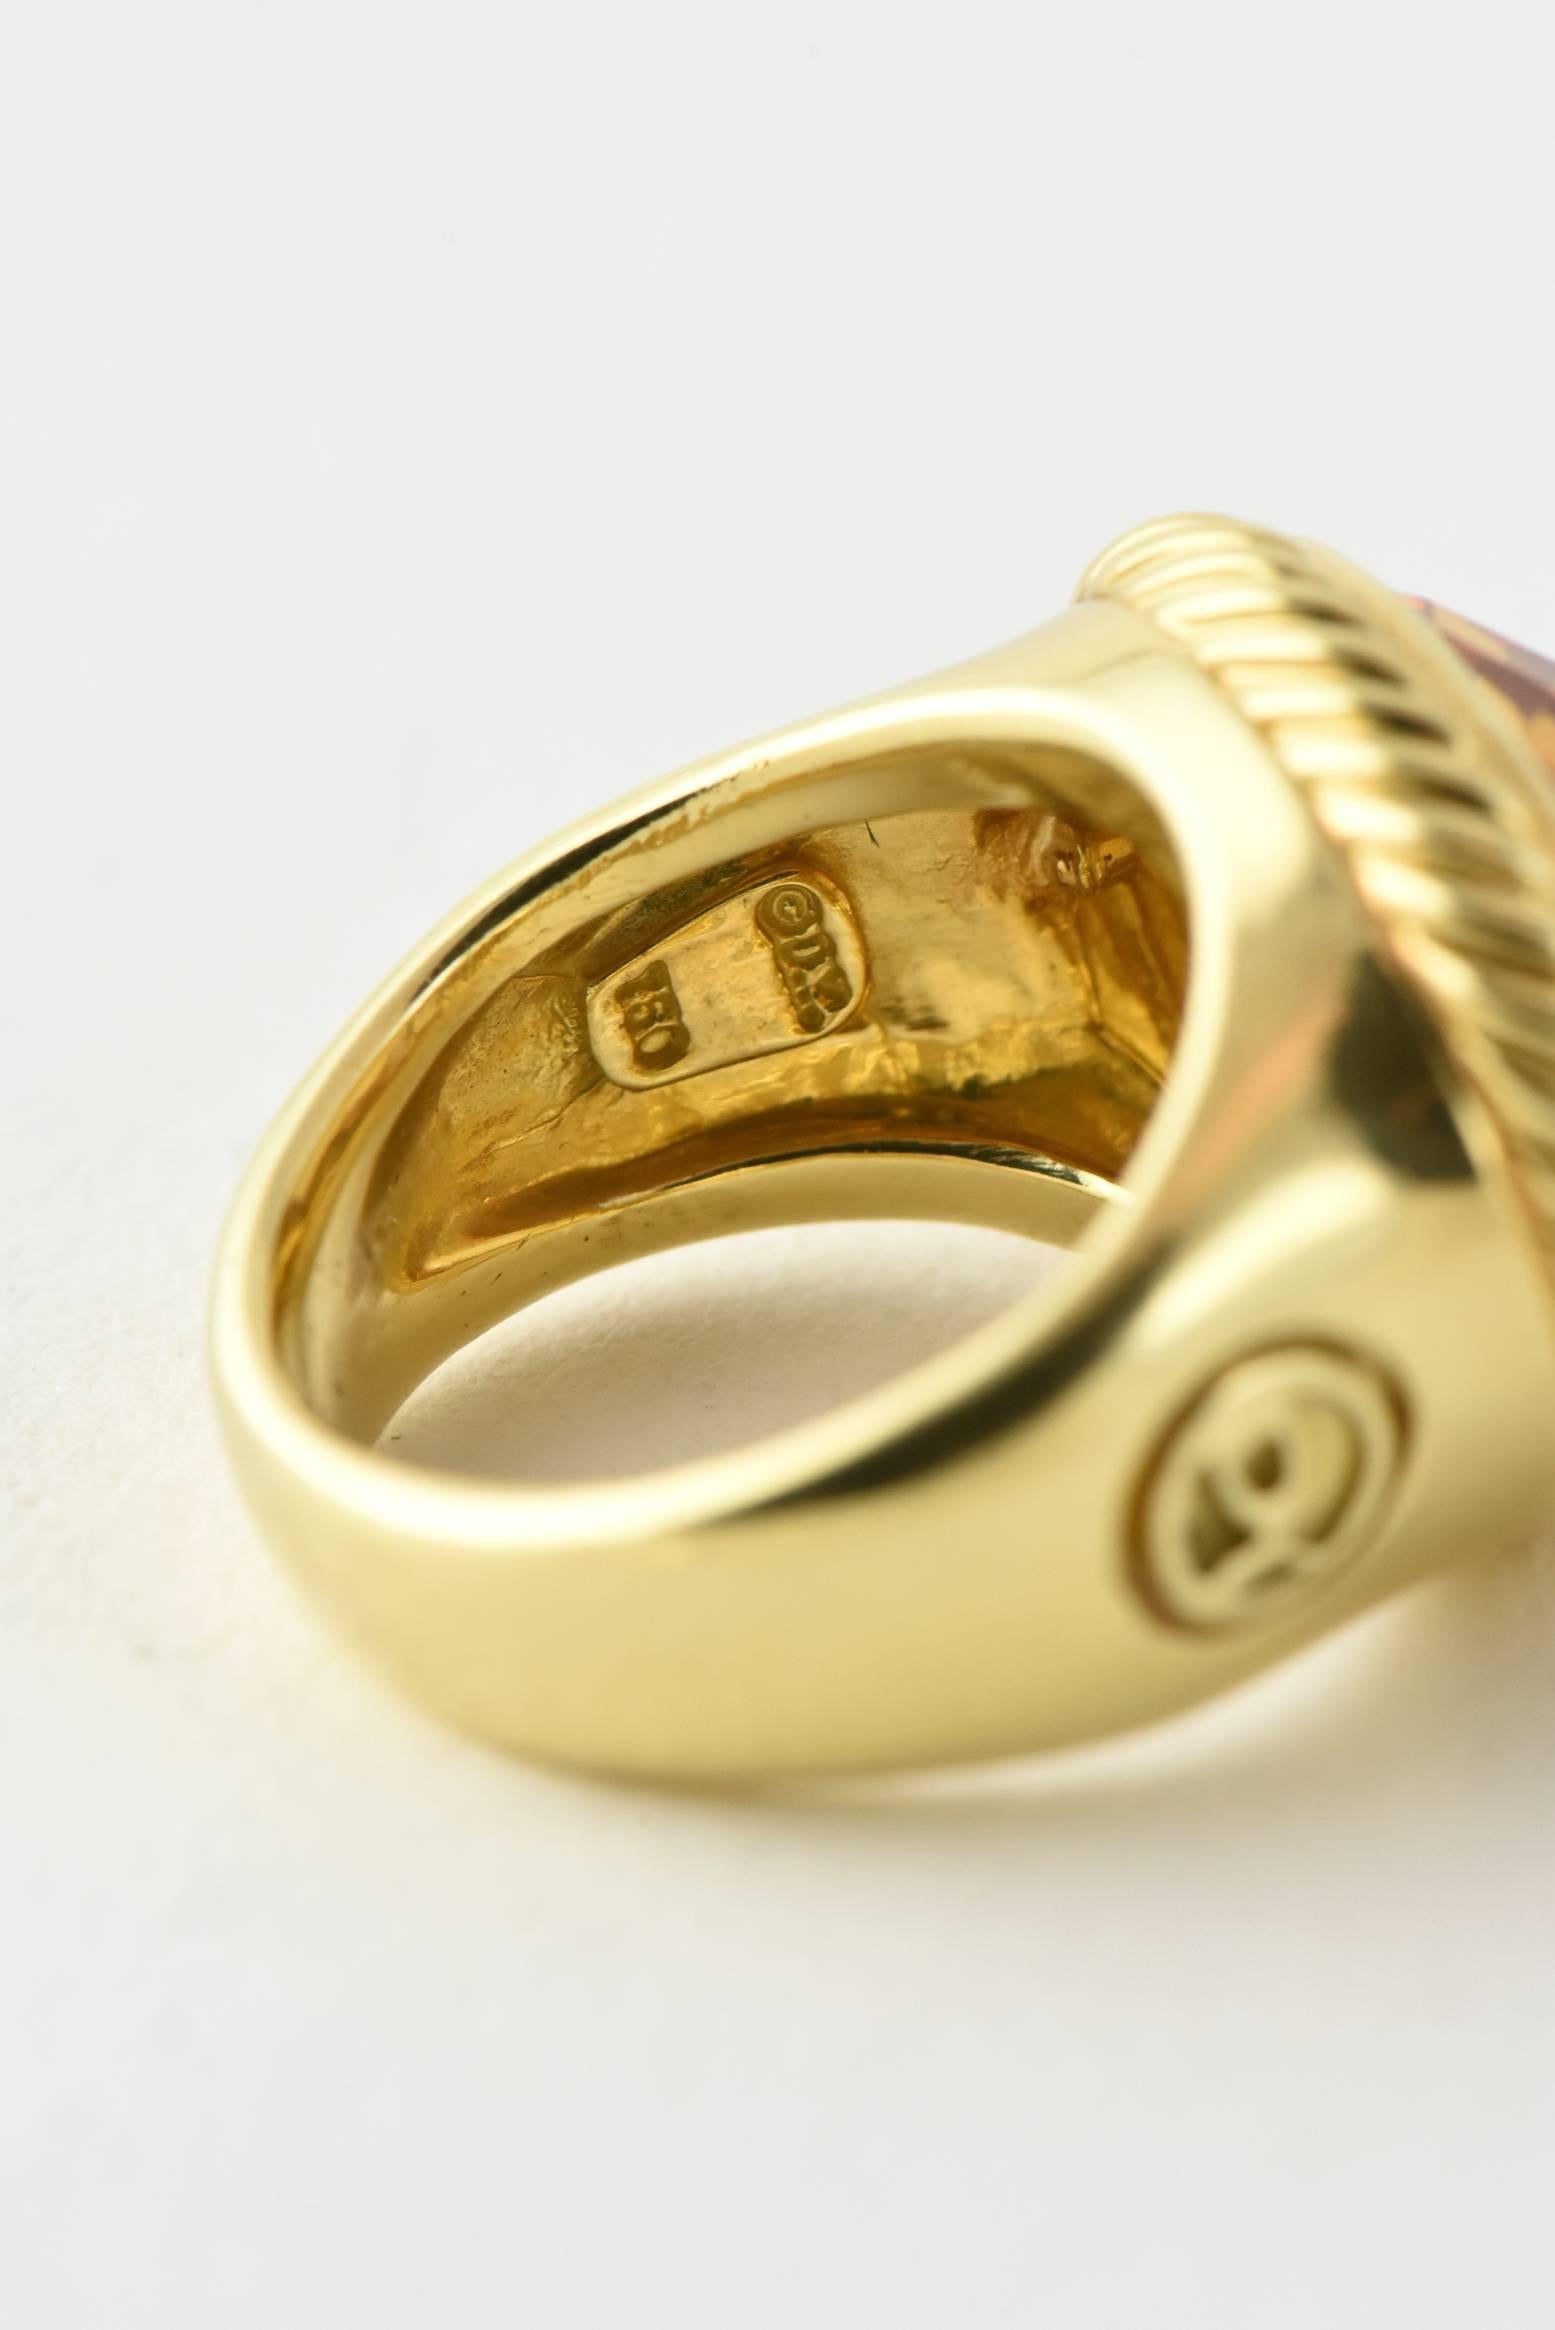 Yurman Citrine Signature Gold Ring For Sale 3